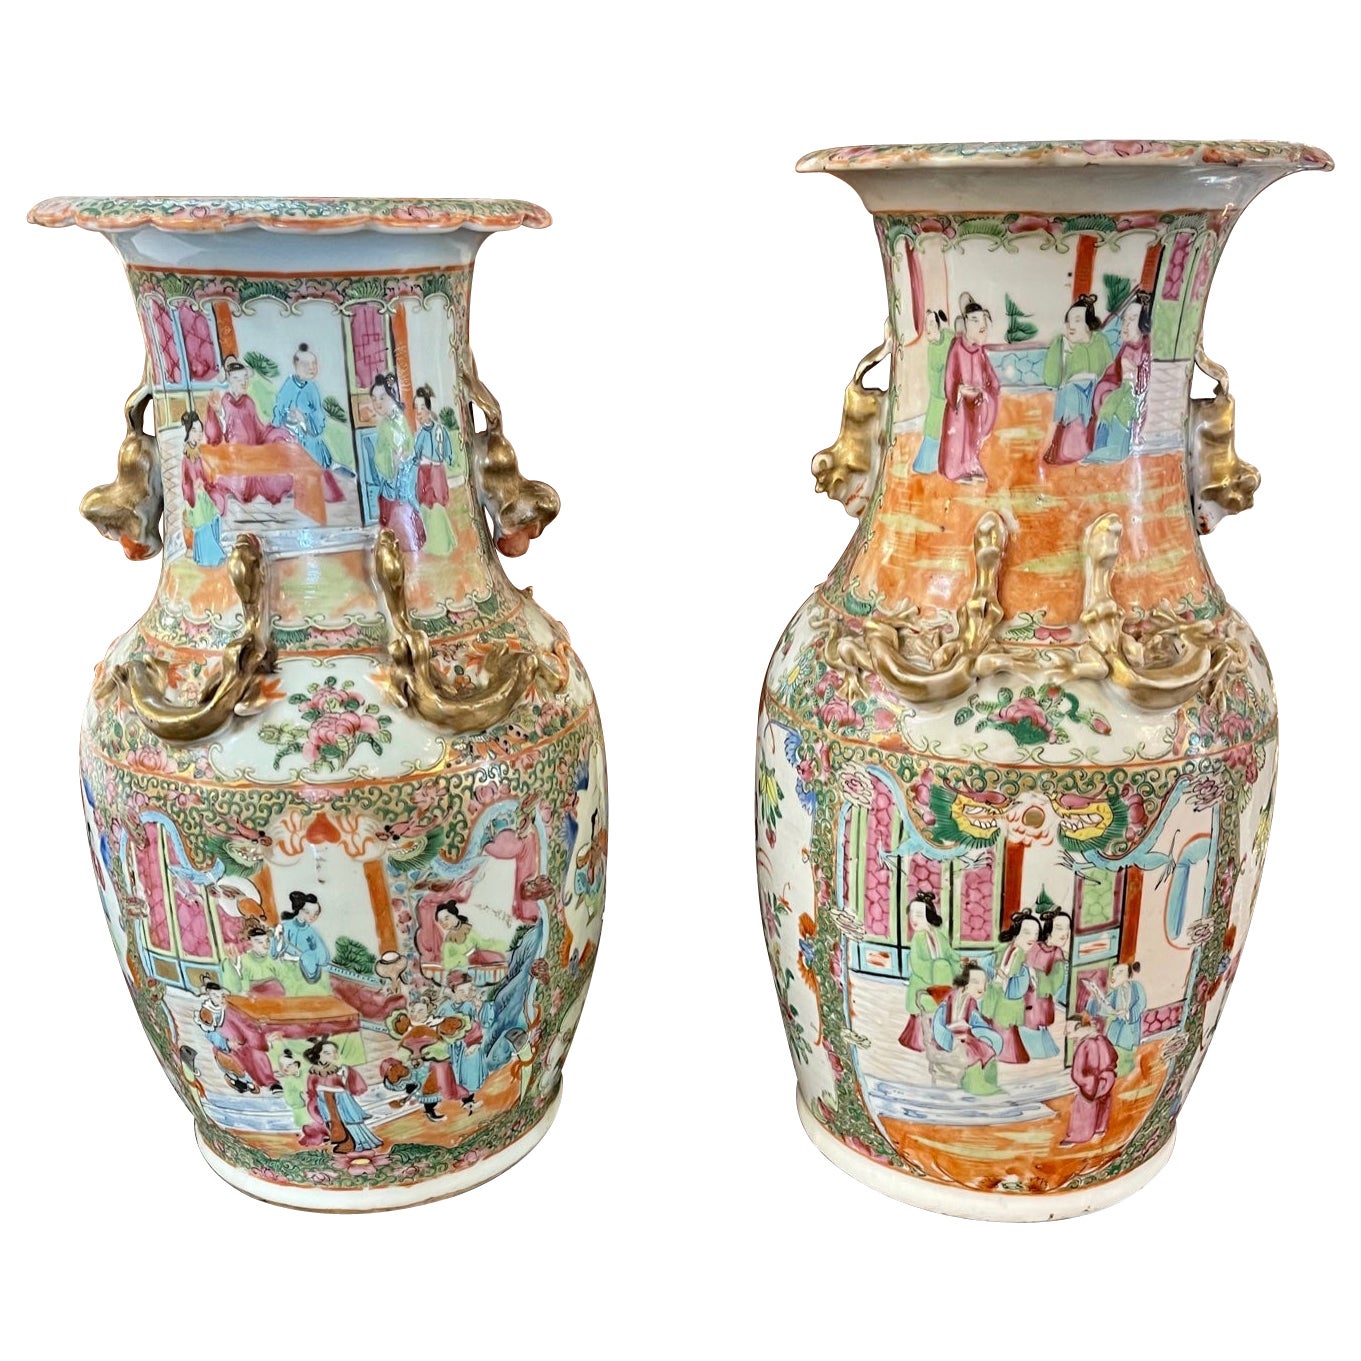 Near Pair of 19th C. Chinese Rose Medallion Vases